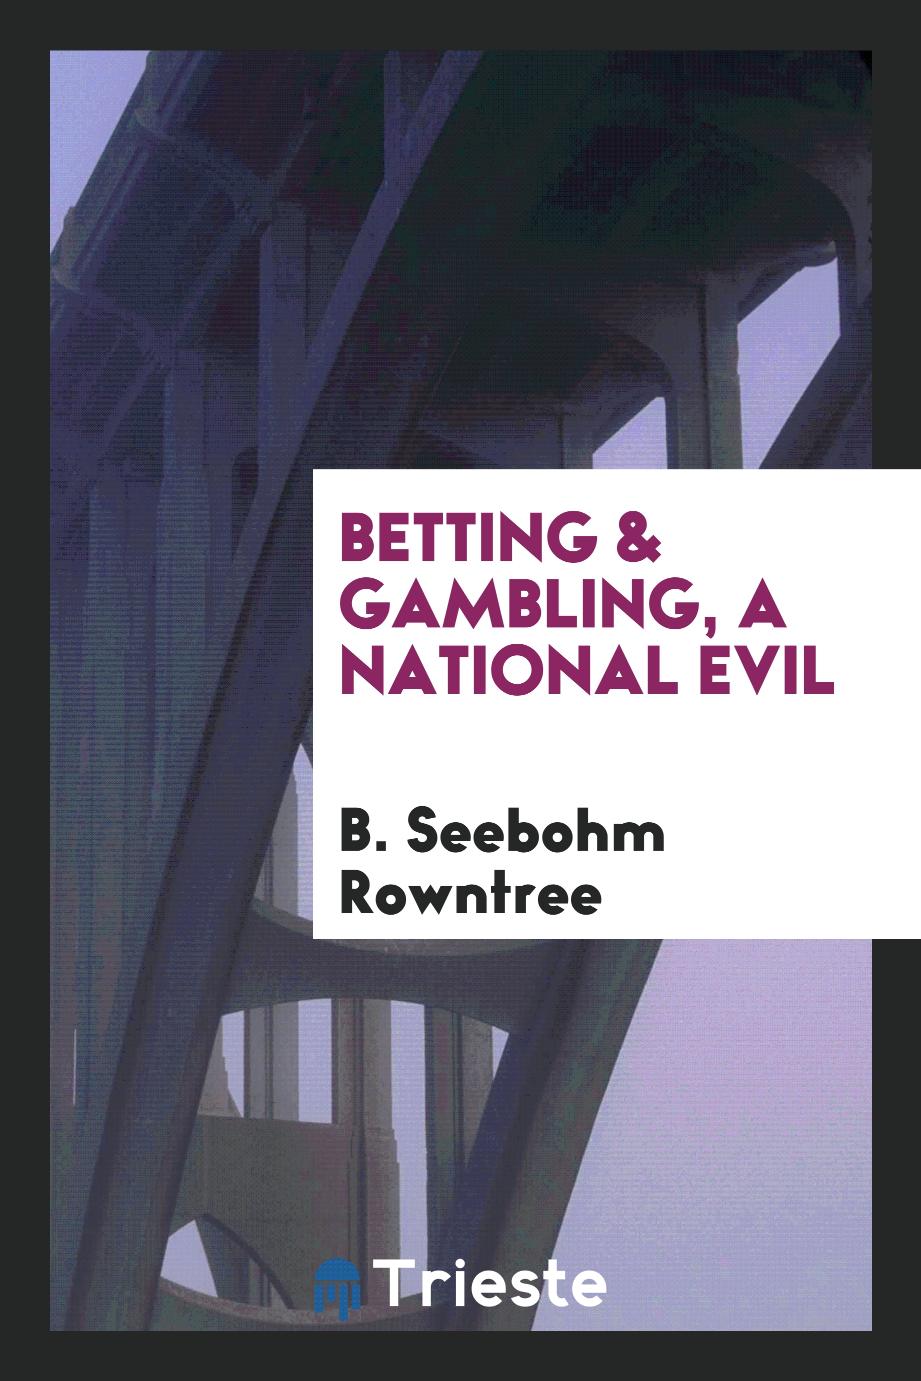 Betting & gambling, a national evil